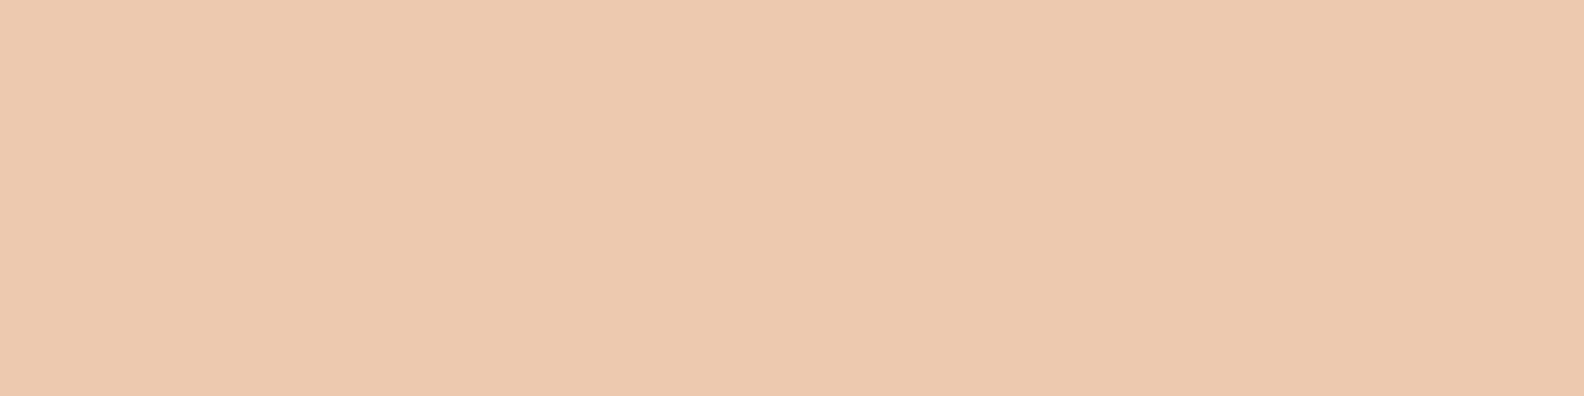 1584x396 Desert Sand Solid Color Background